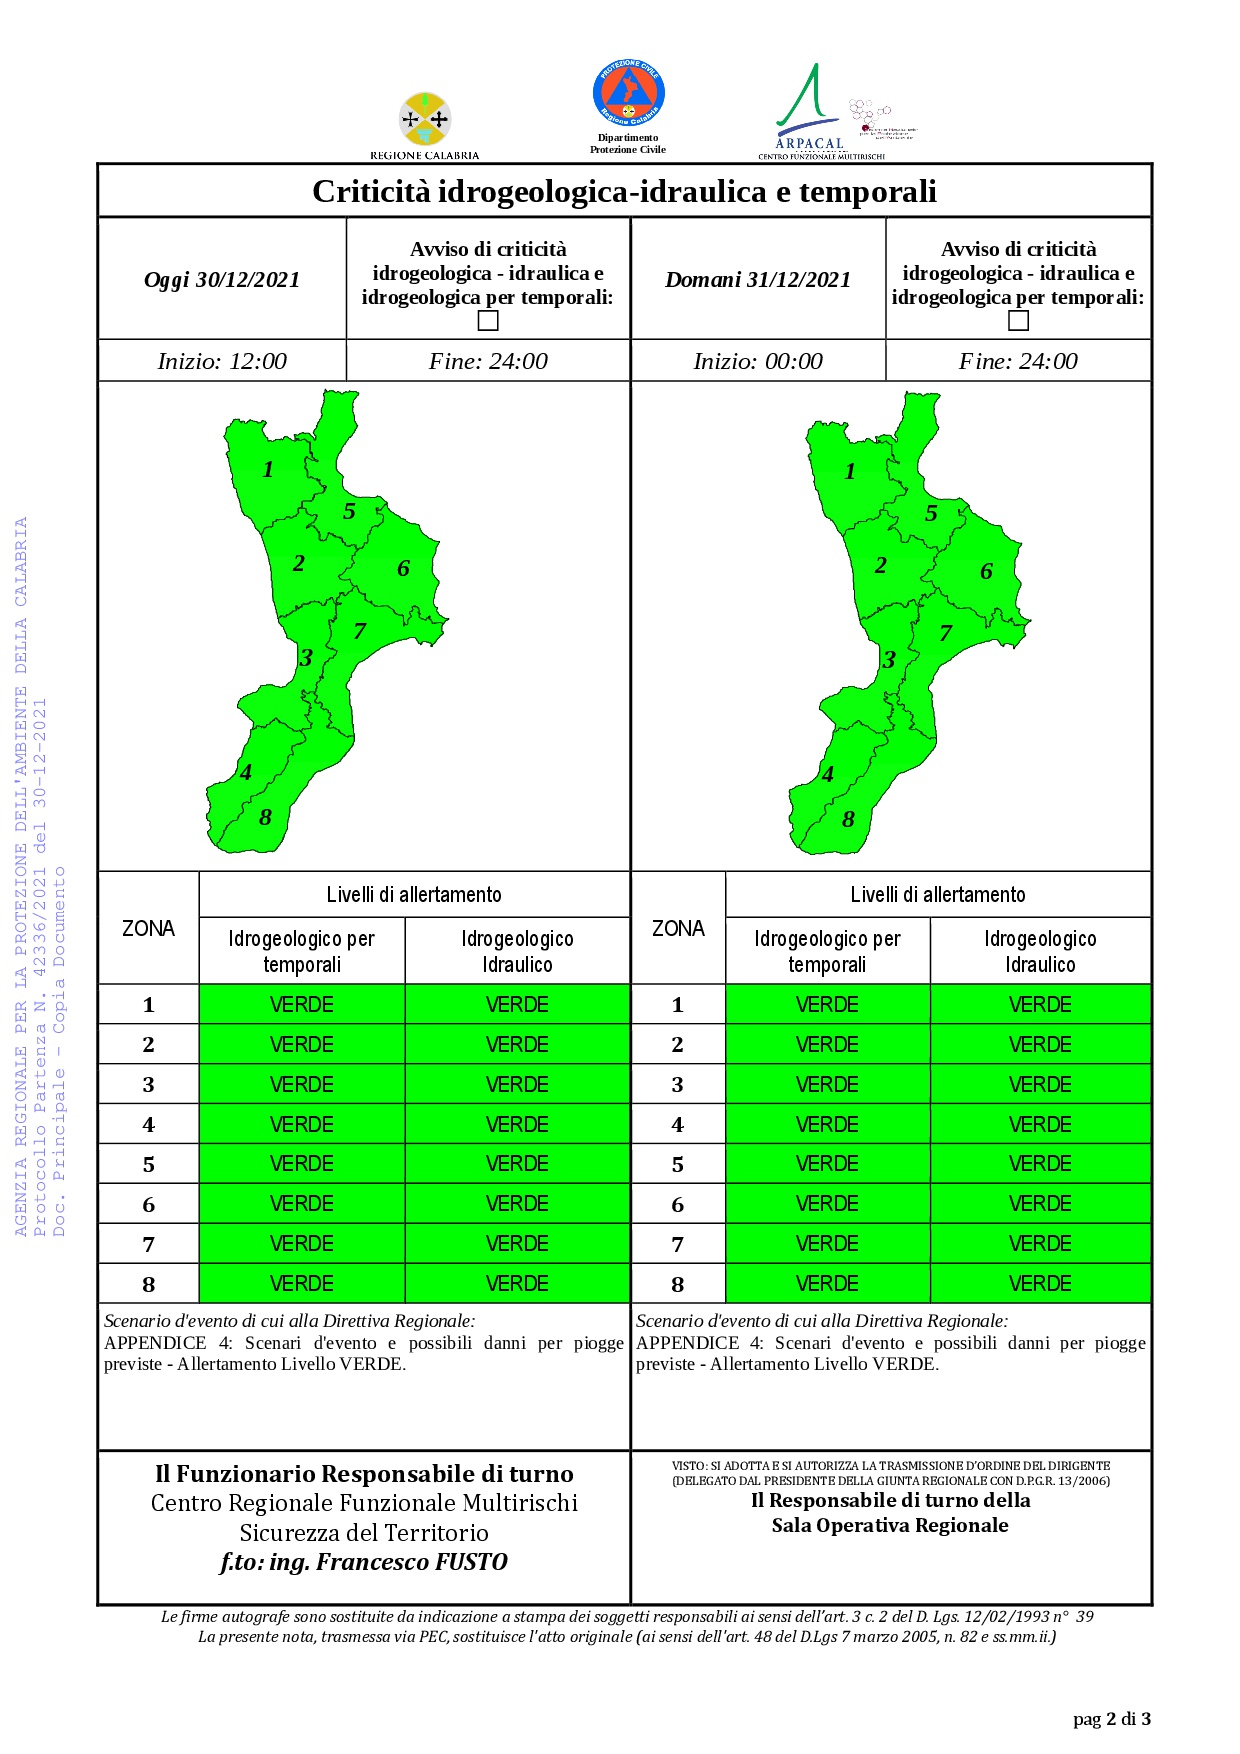 Criticità idrogeologica-idraulica e temporali in Calabria 30-12-2021